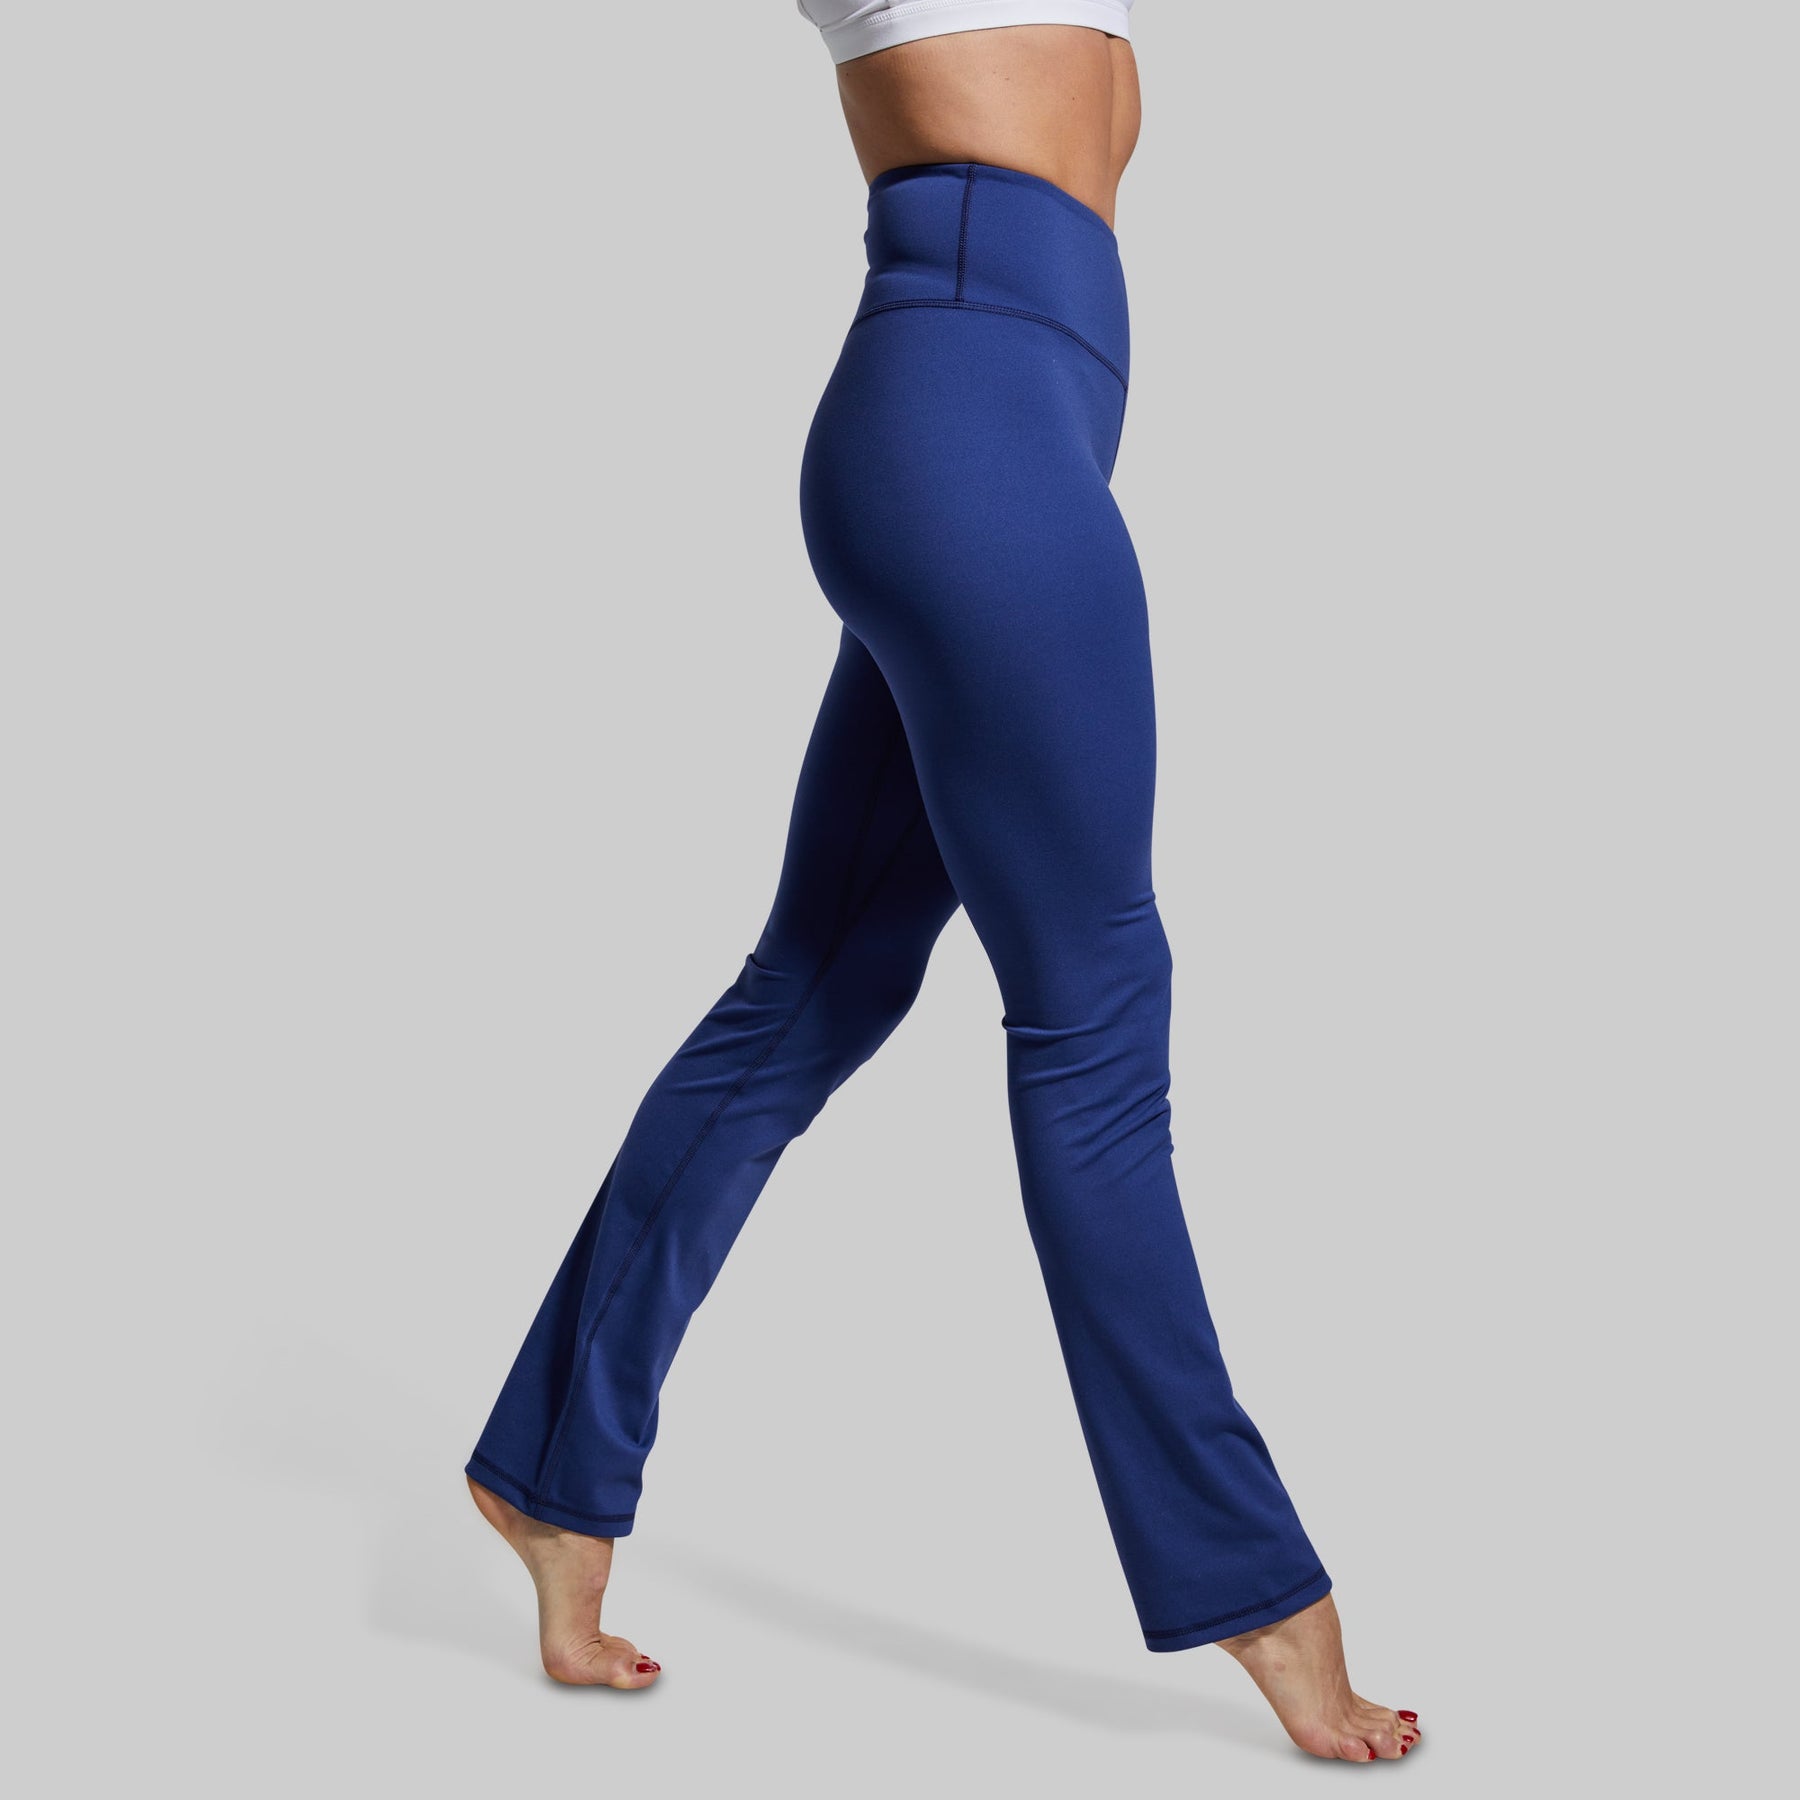 Petrol Blue yoga pants  Pants for women, Blue yoga pants